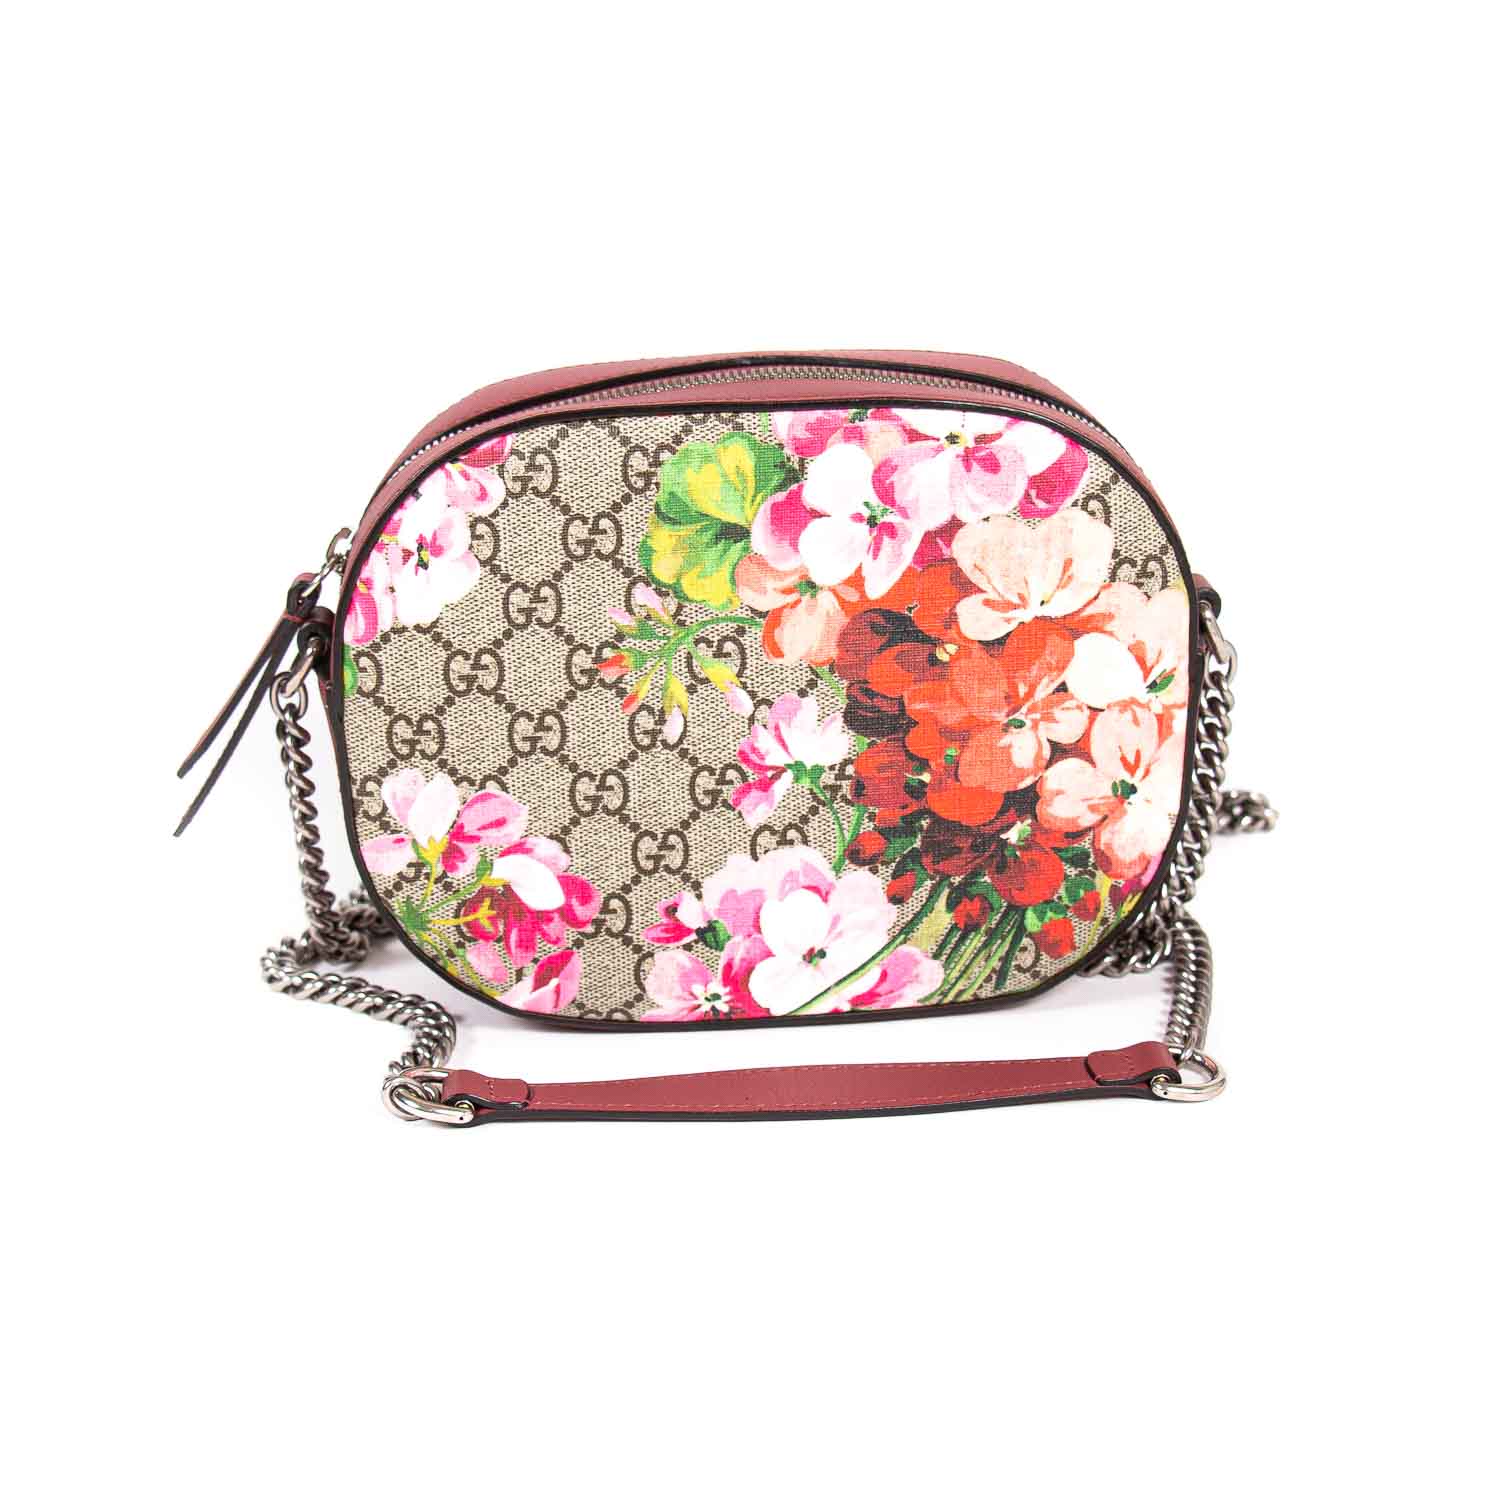 Shop authentic Gucci Blooms Camera Crossbody Bag at revogue for just ...